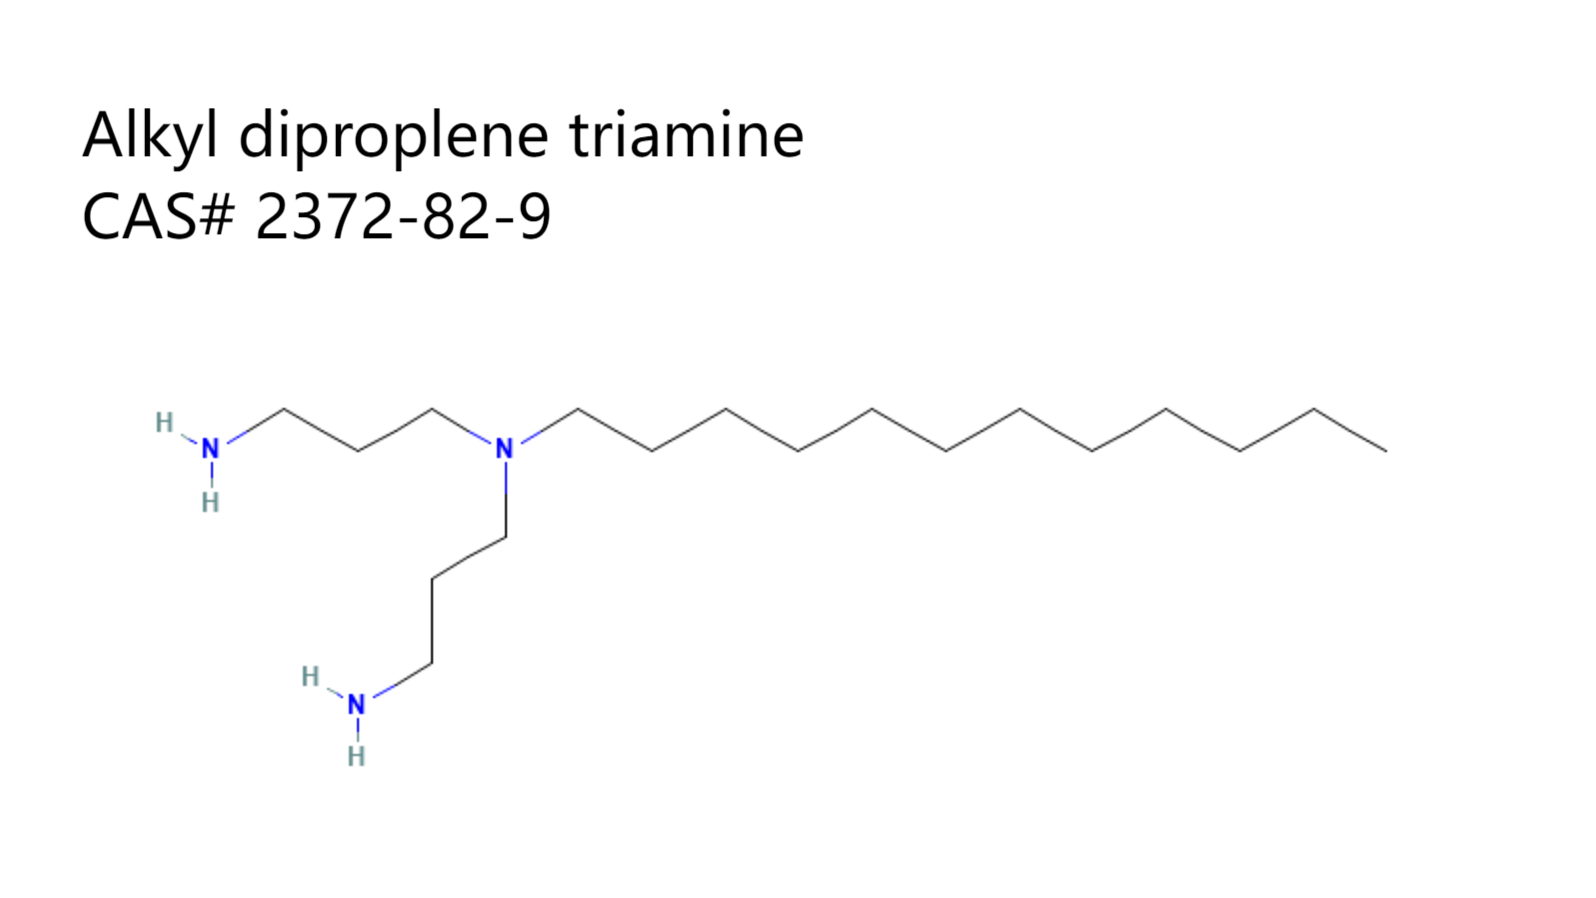 Alkyl diproplene triamine